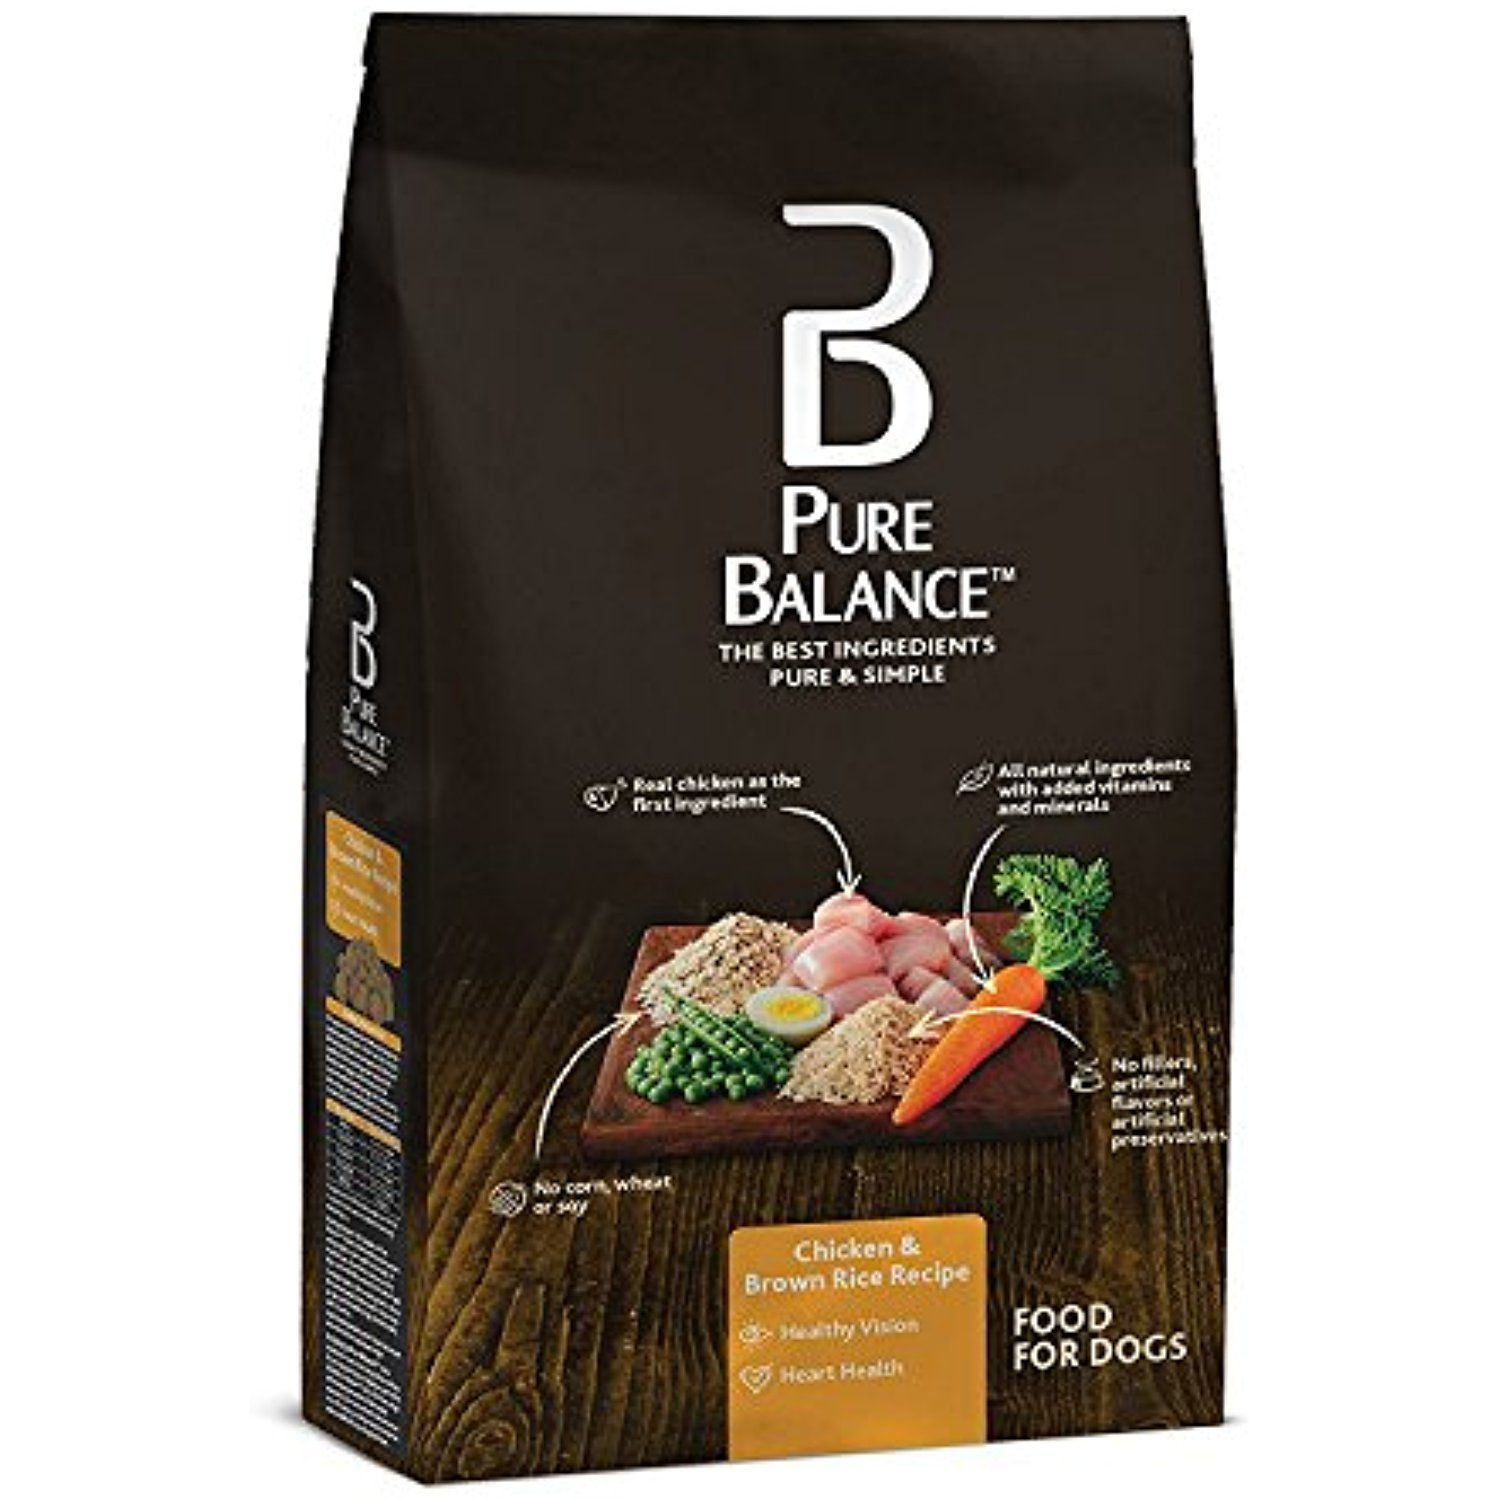 Pure Balance Lamb And Brown Rice
 Pure Balance Dog Food Chicken & Brown Rice Recipe 5 lb